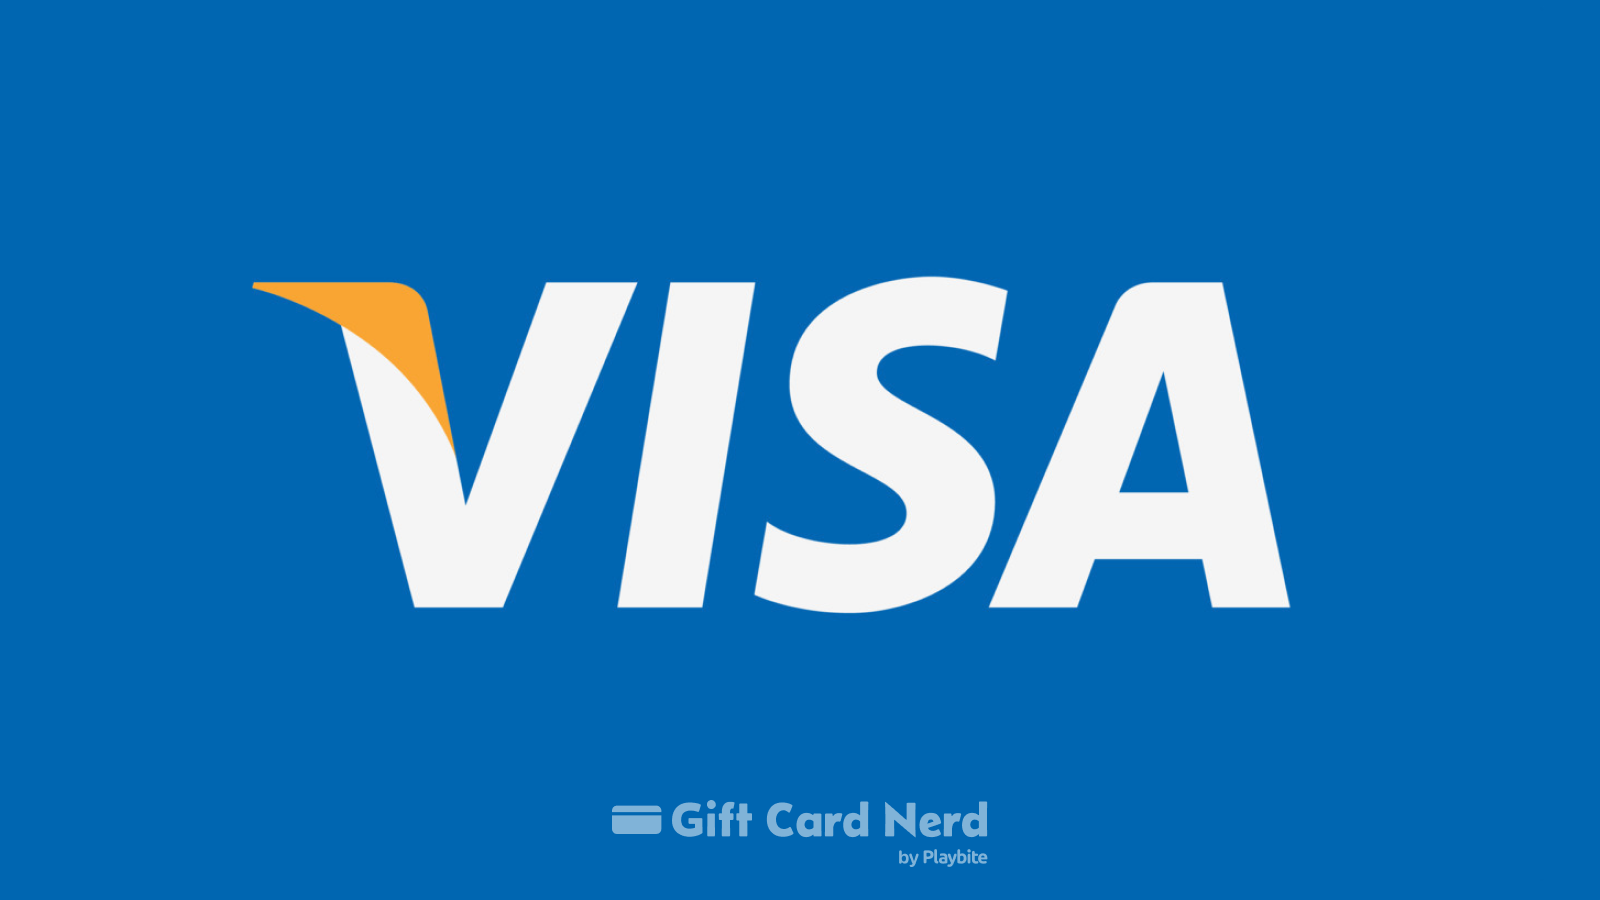 Where to Buy Visa Gift Cards: Amazon